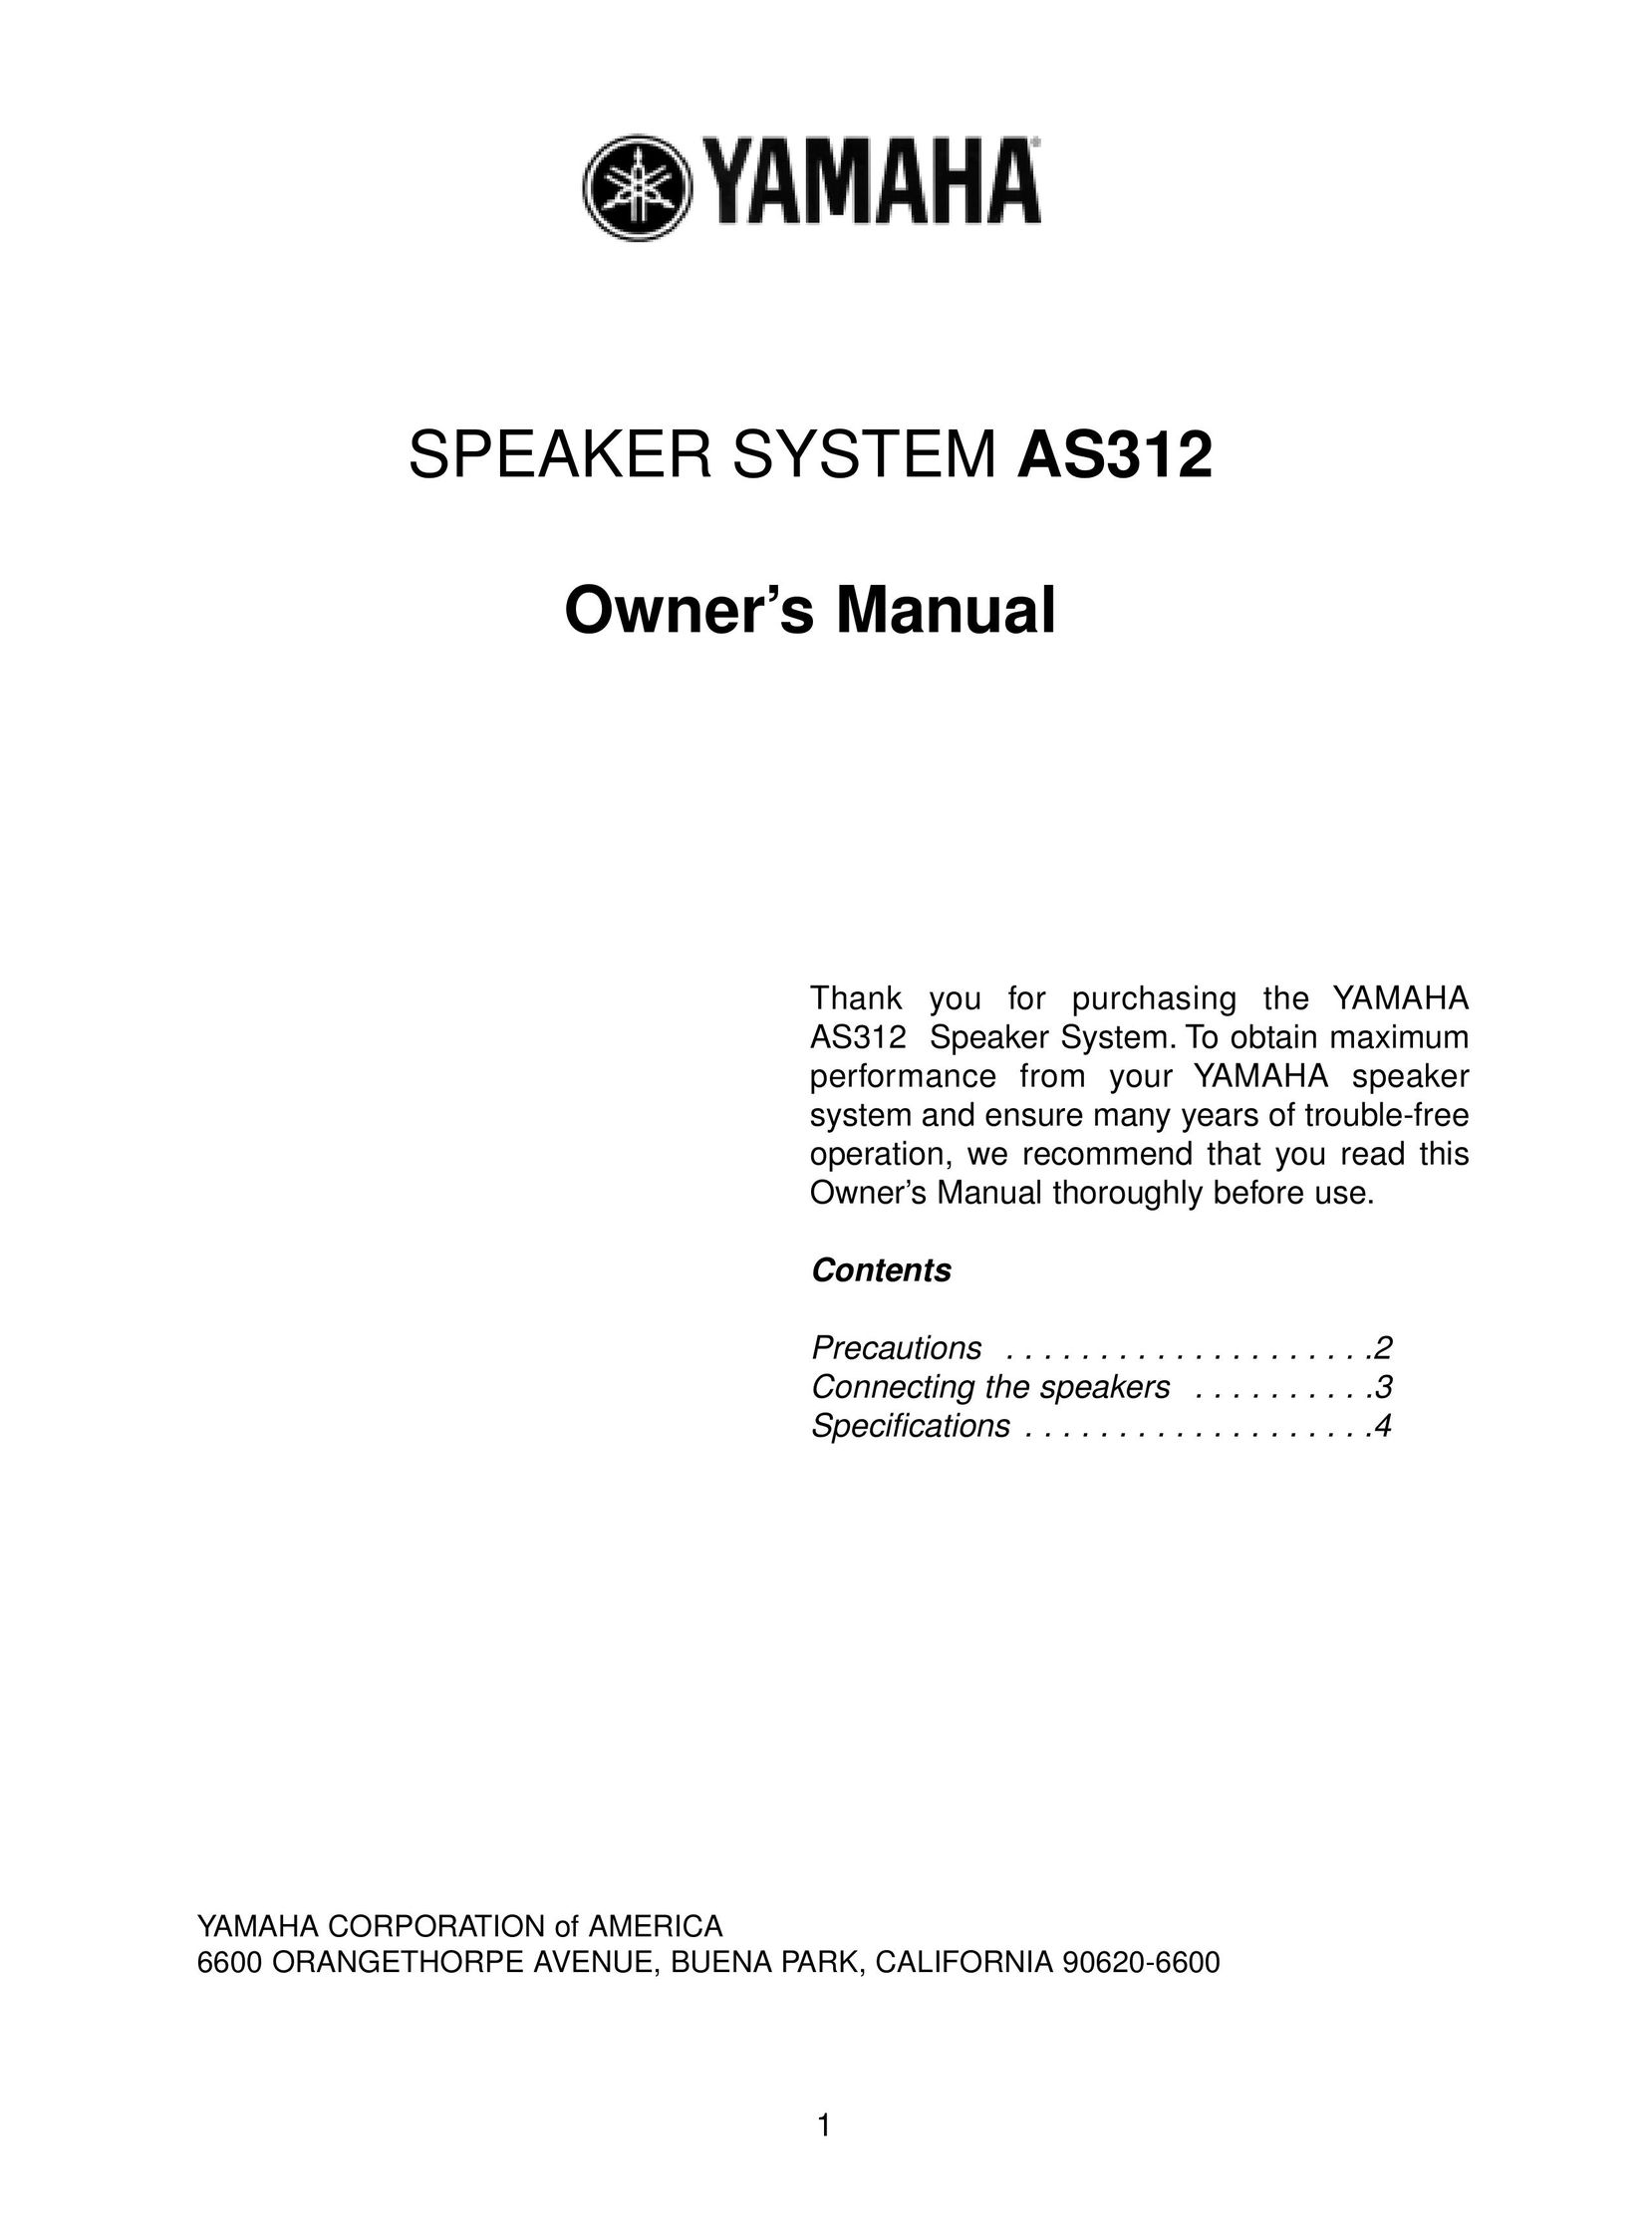 Yamaha AS312 Speaker System User Manual